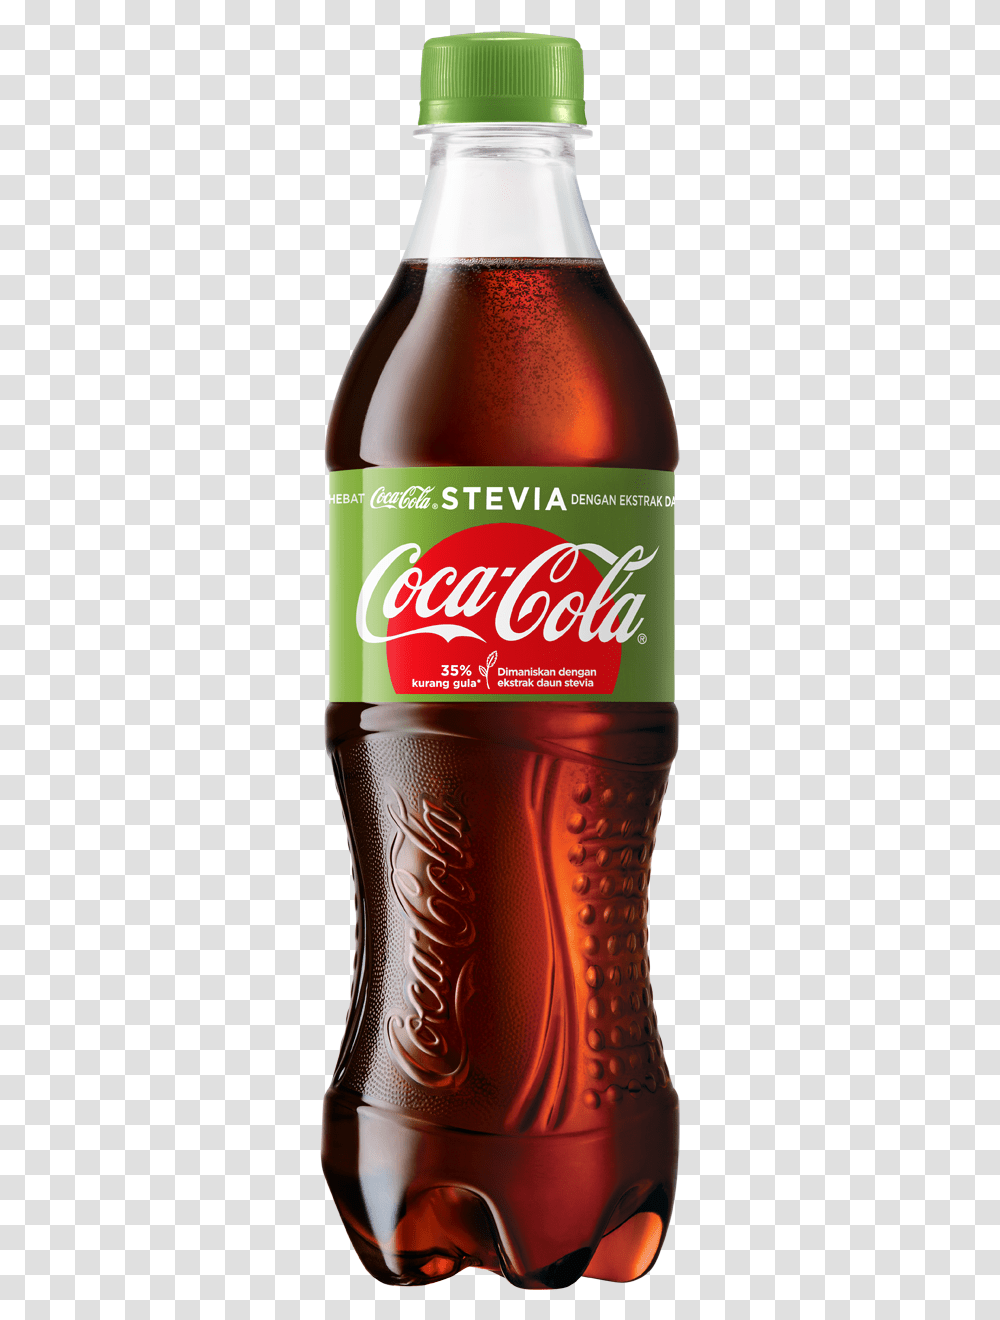 Coca Cola Stevia Malaysia, Soda, Beverage, Drink, Coke Transparent Png